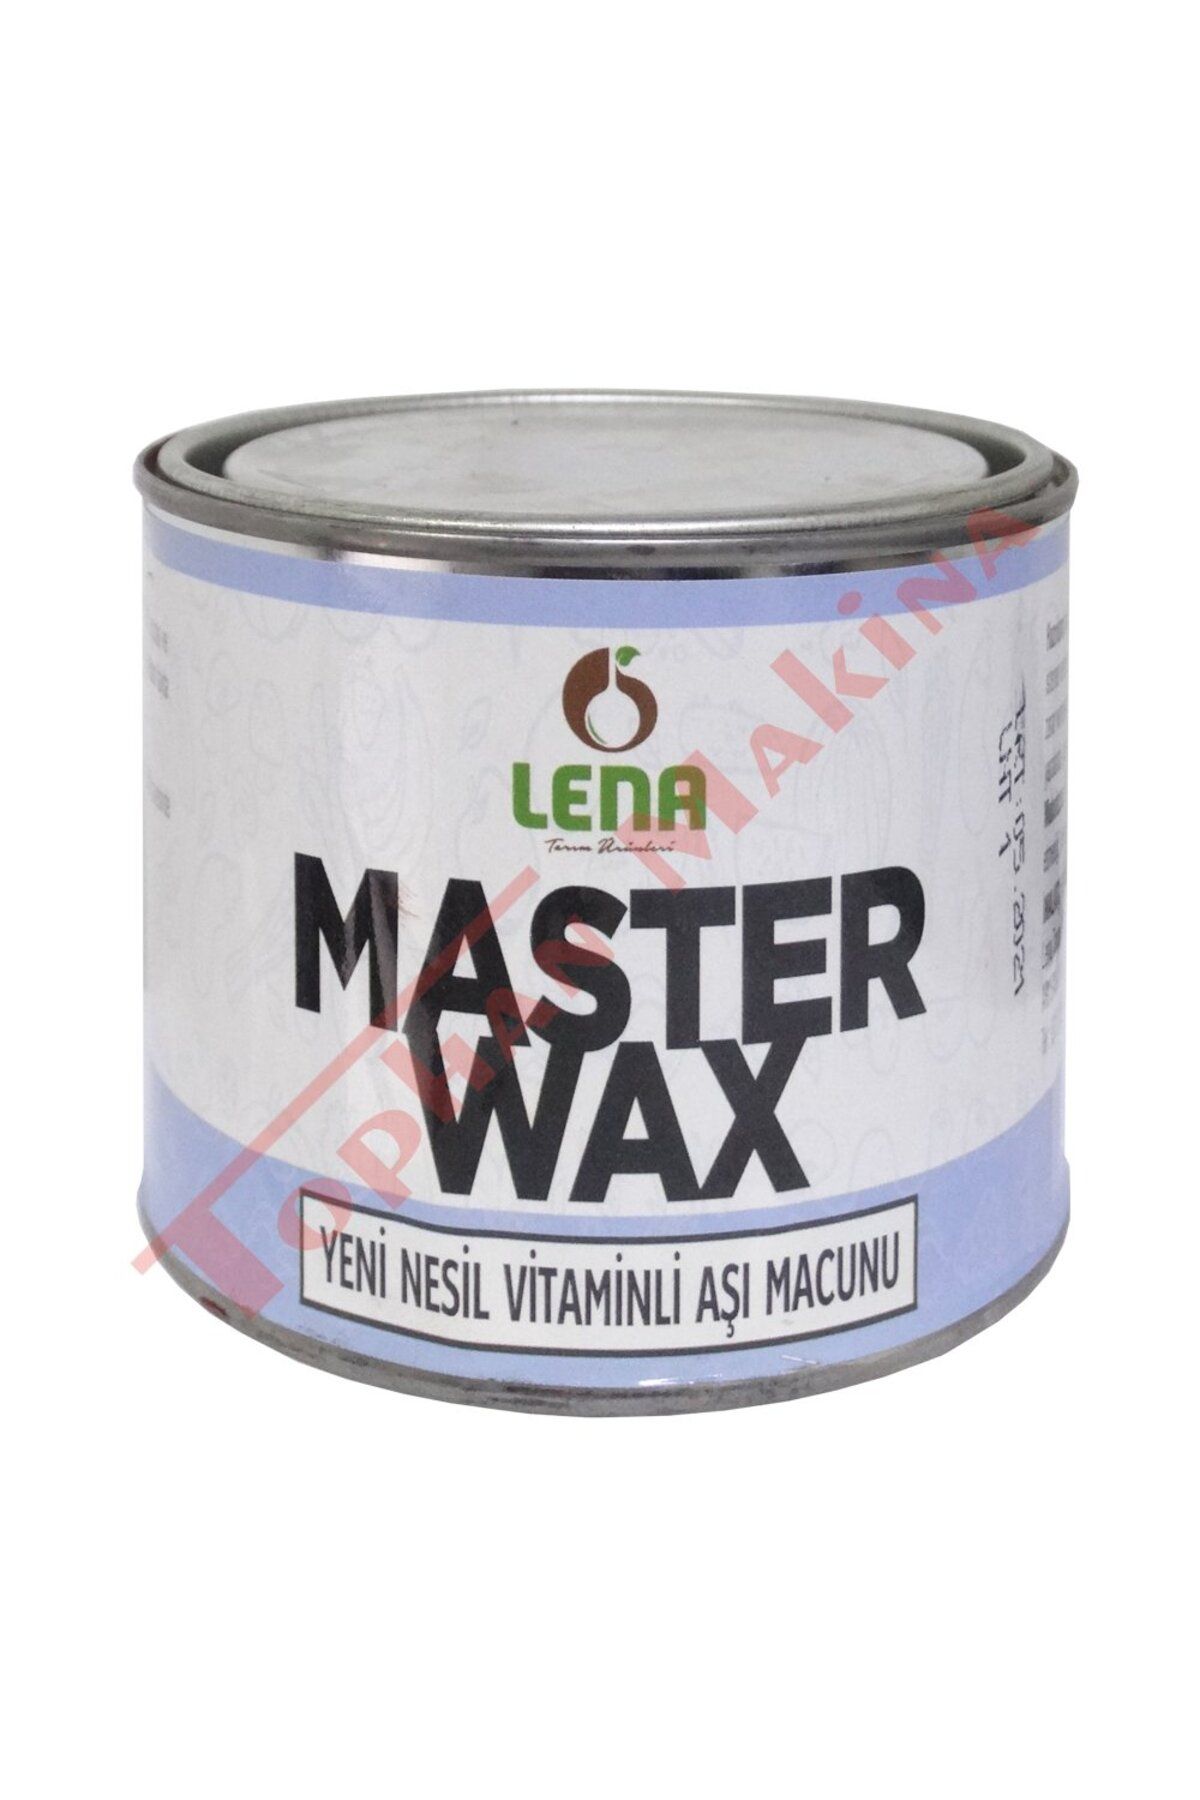 LENA Master Wax Aşı Macunu Vitaminli 500gr